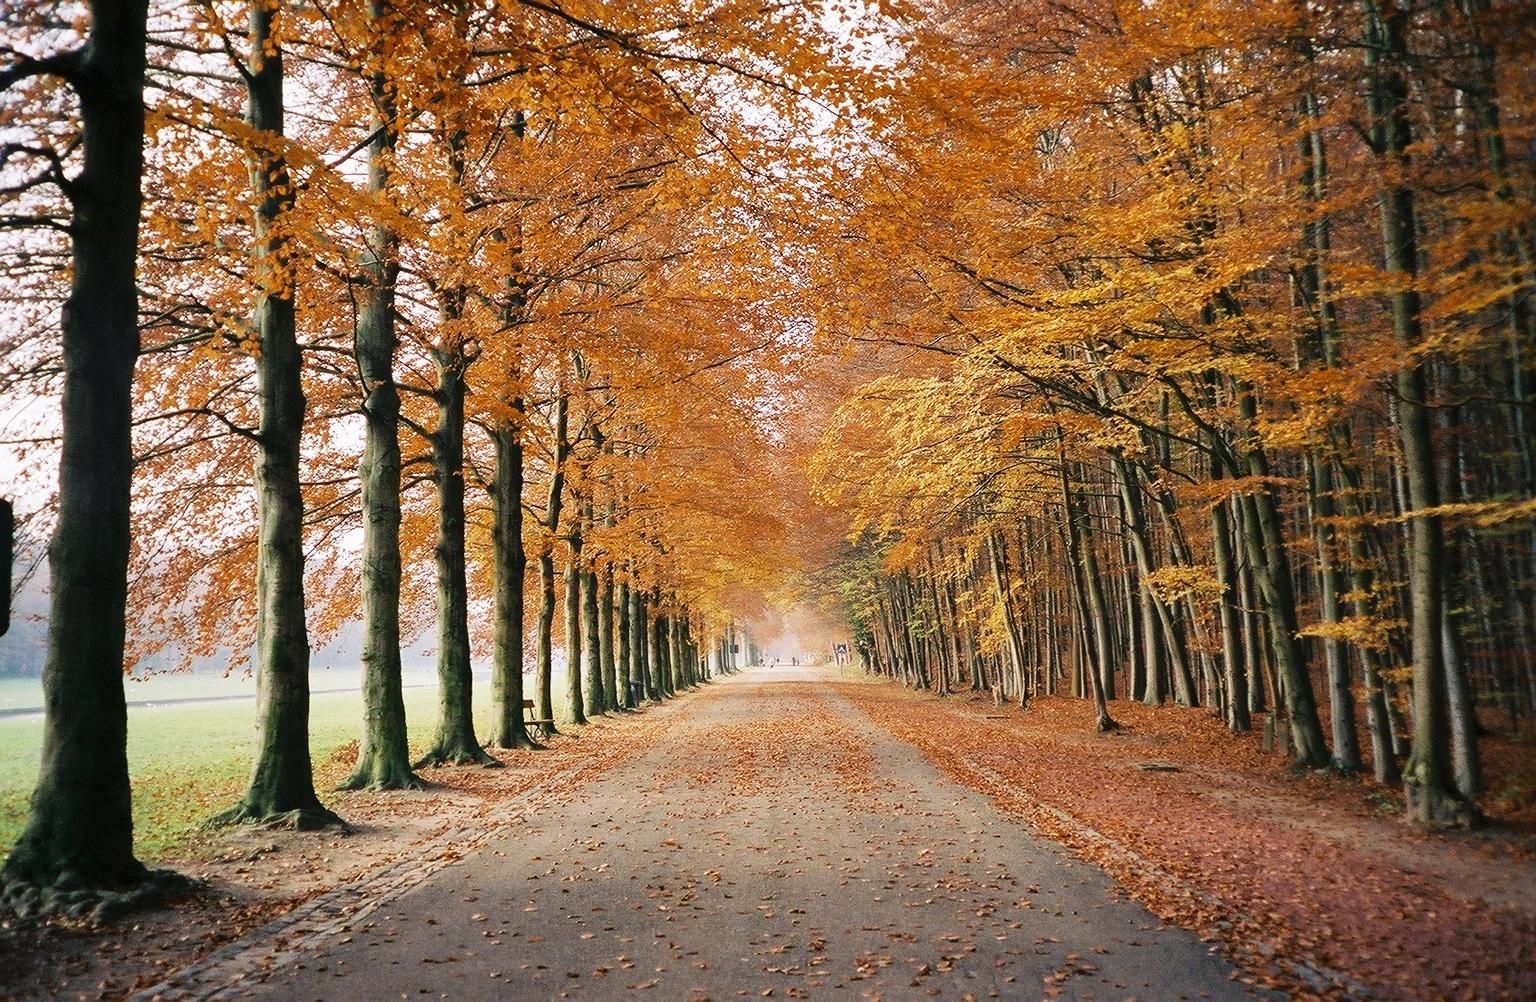 Fall in Belgium. My own photo.